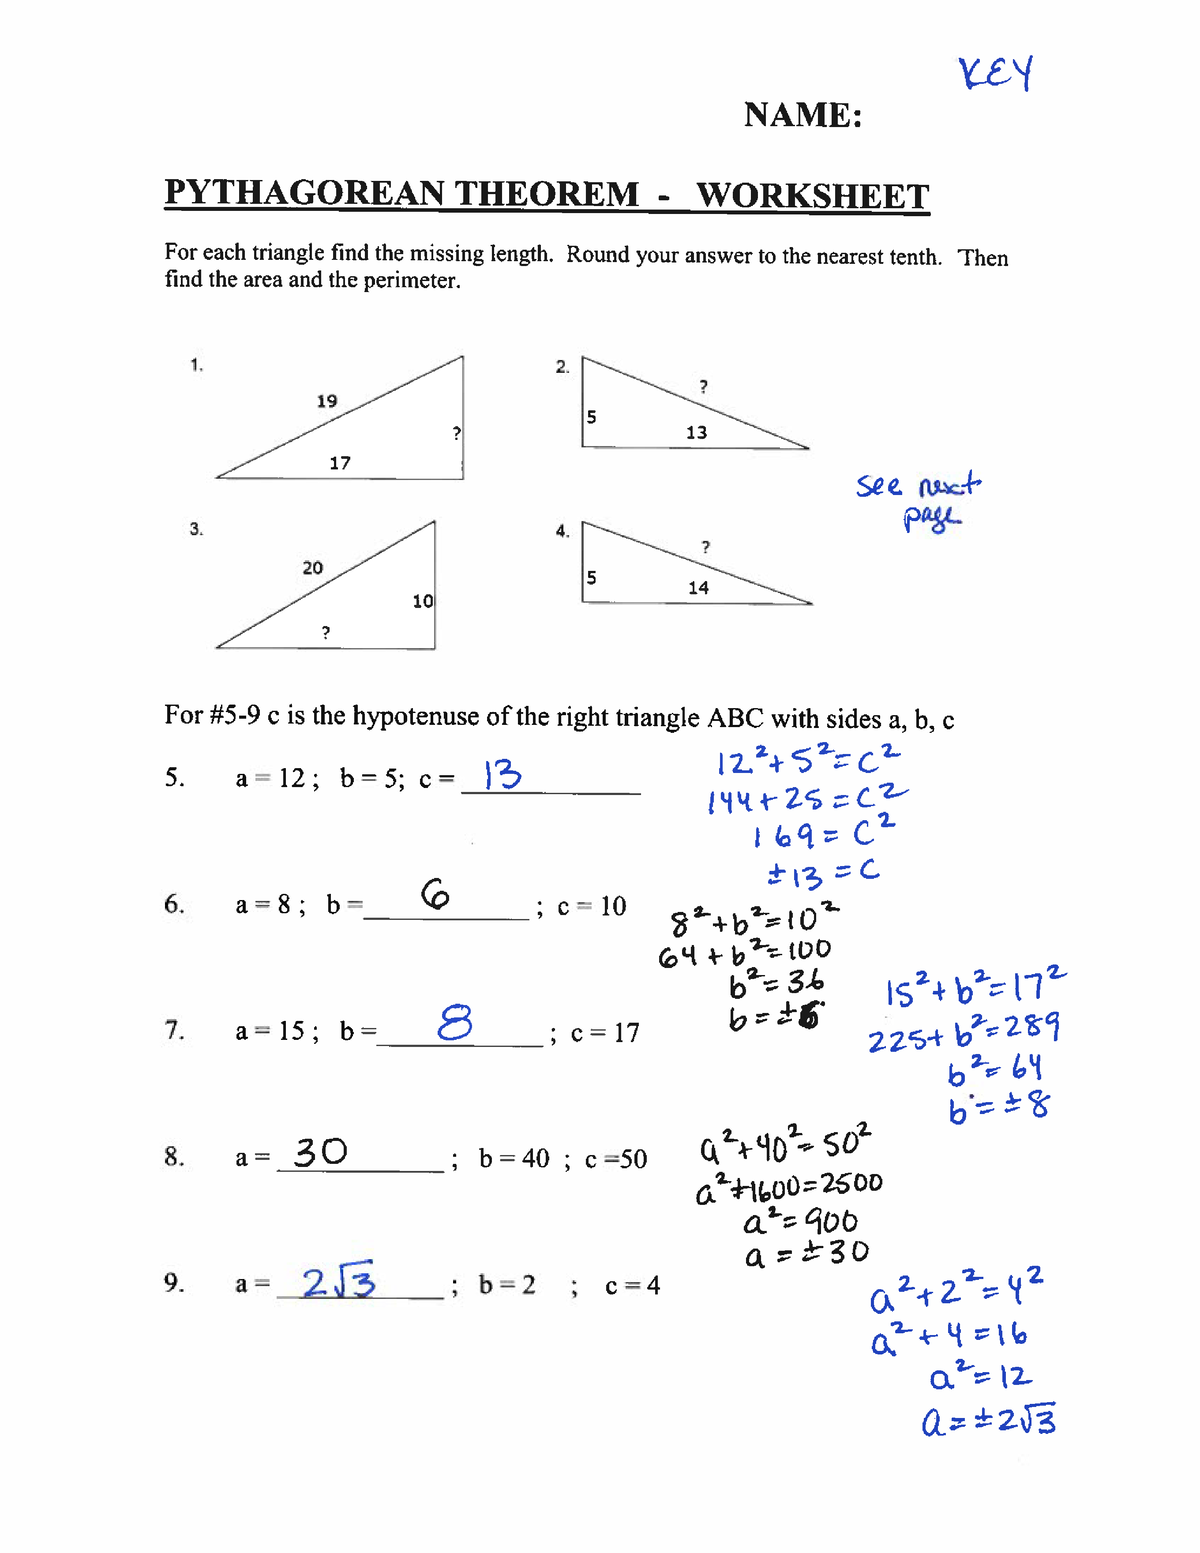 unit pythagorean theorem homework 5 answer key